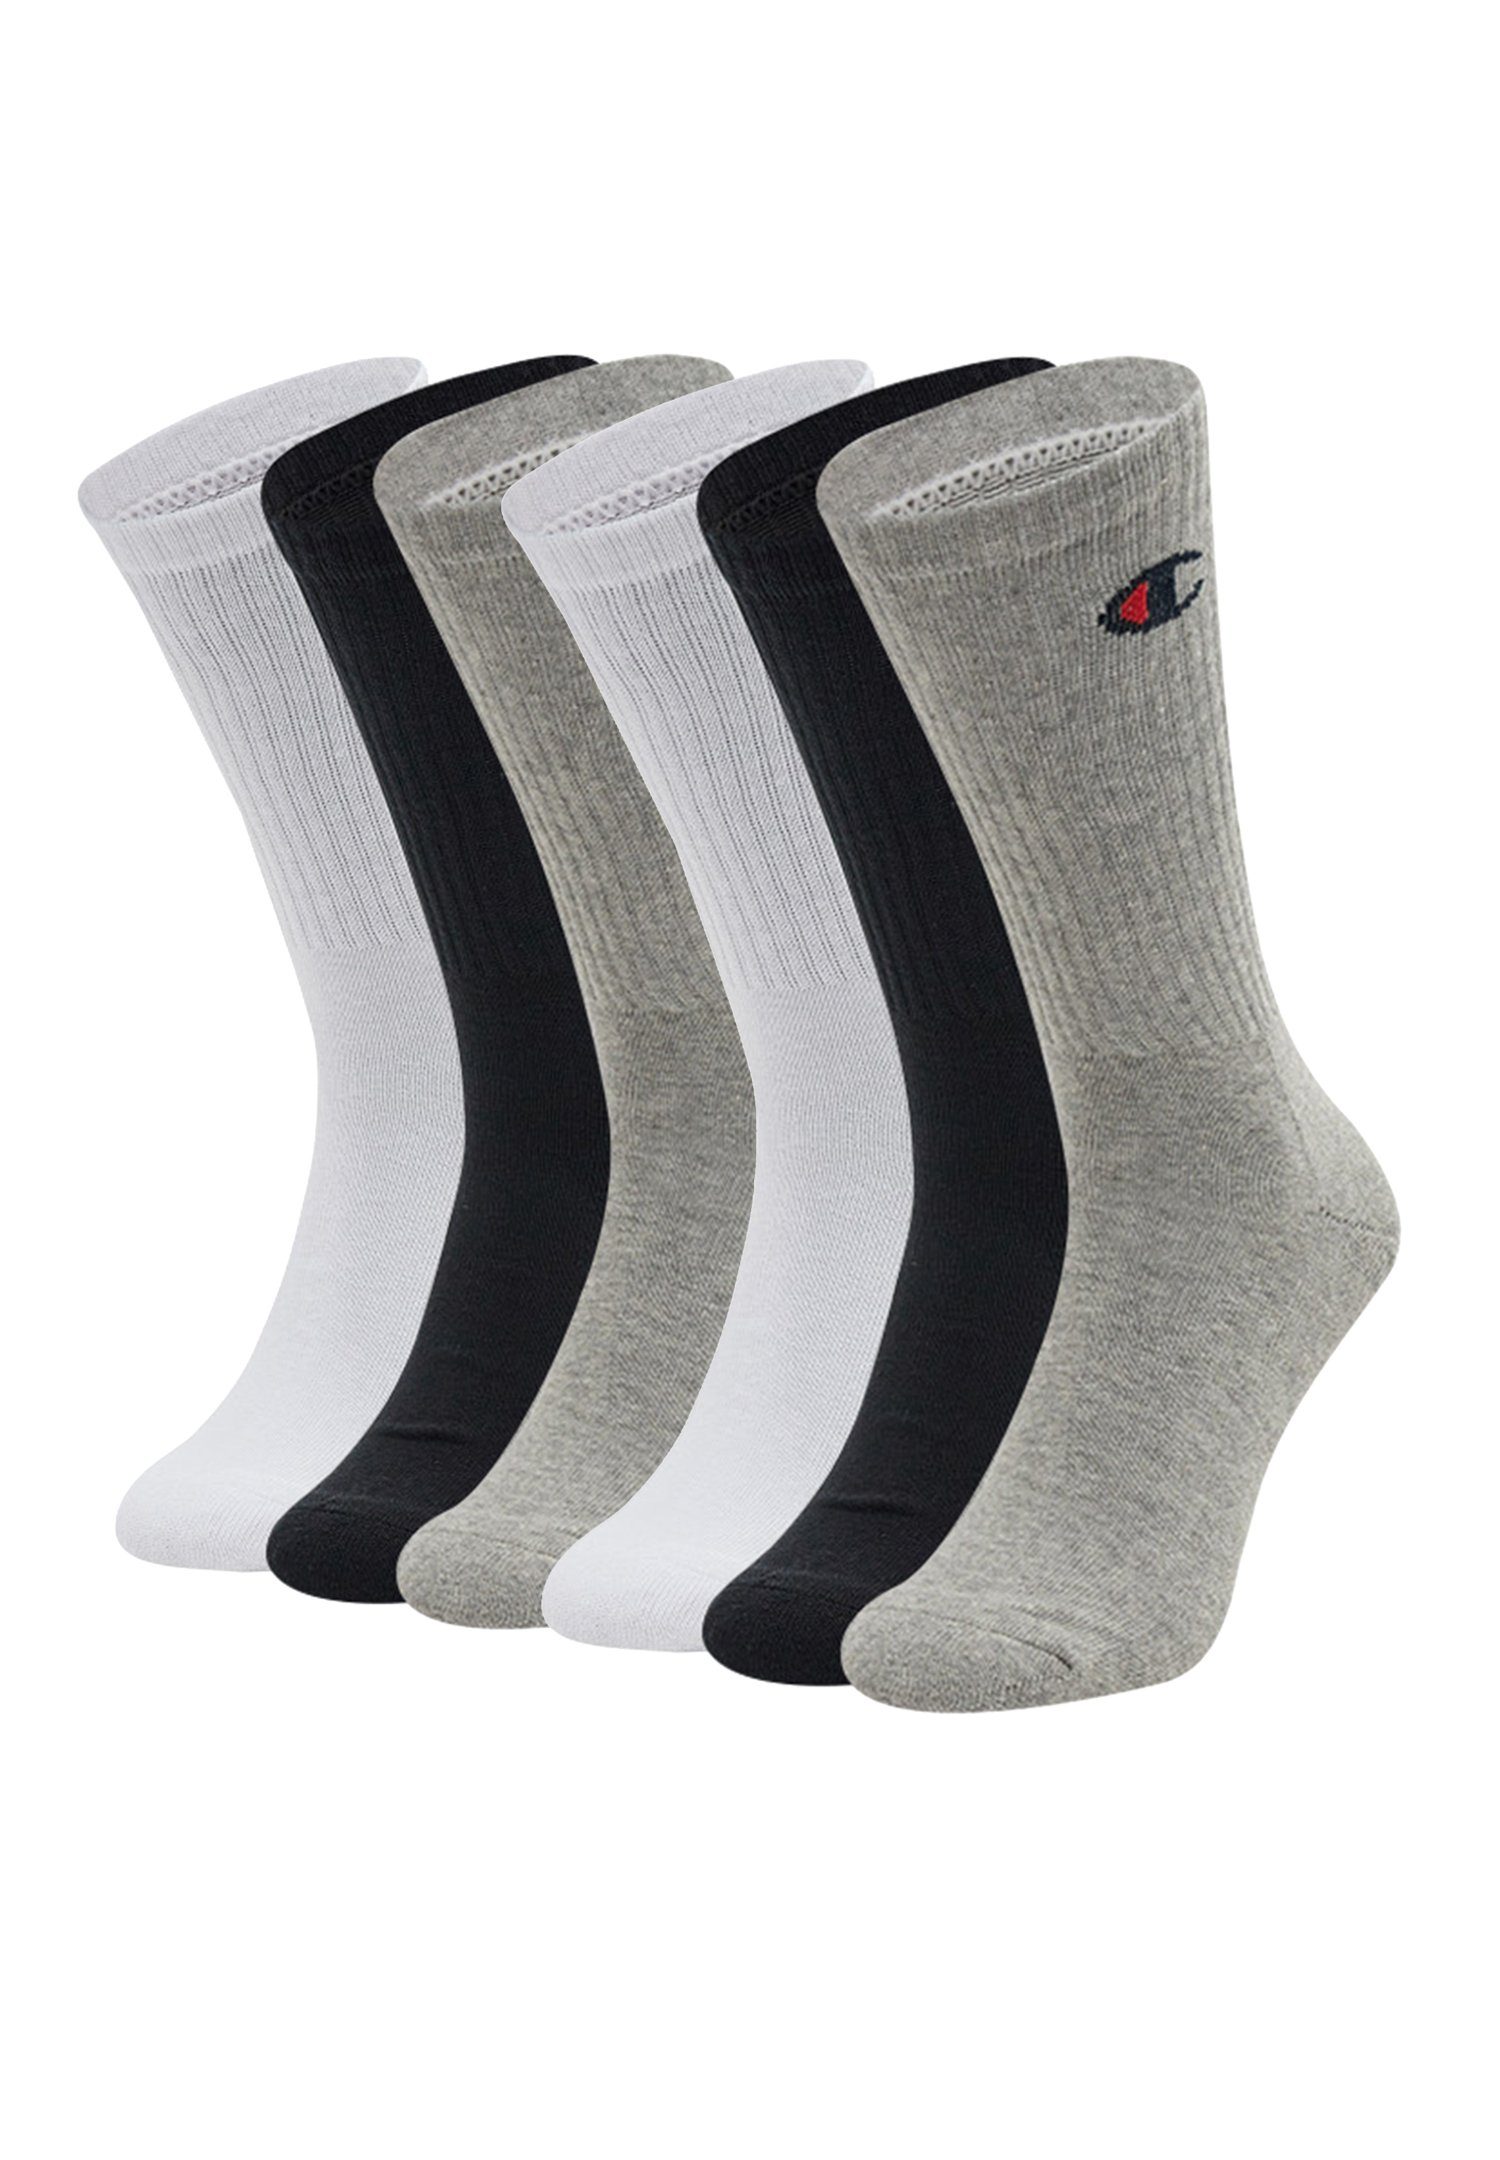 - Socks Champion 002 Crew White/Grey/Black 6pk (6-Paar) Socken